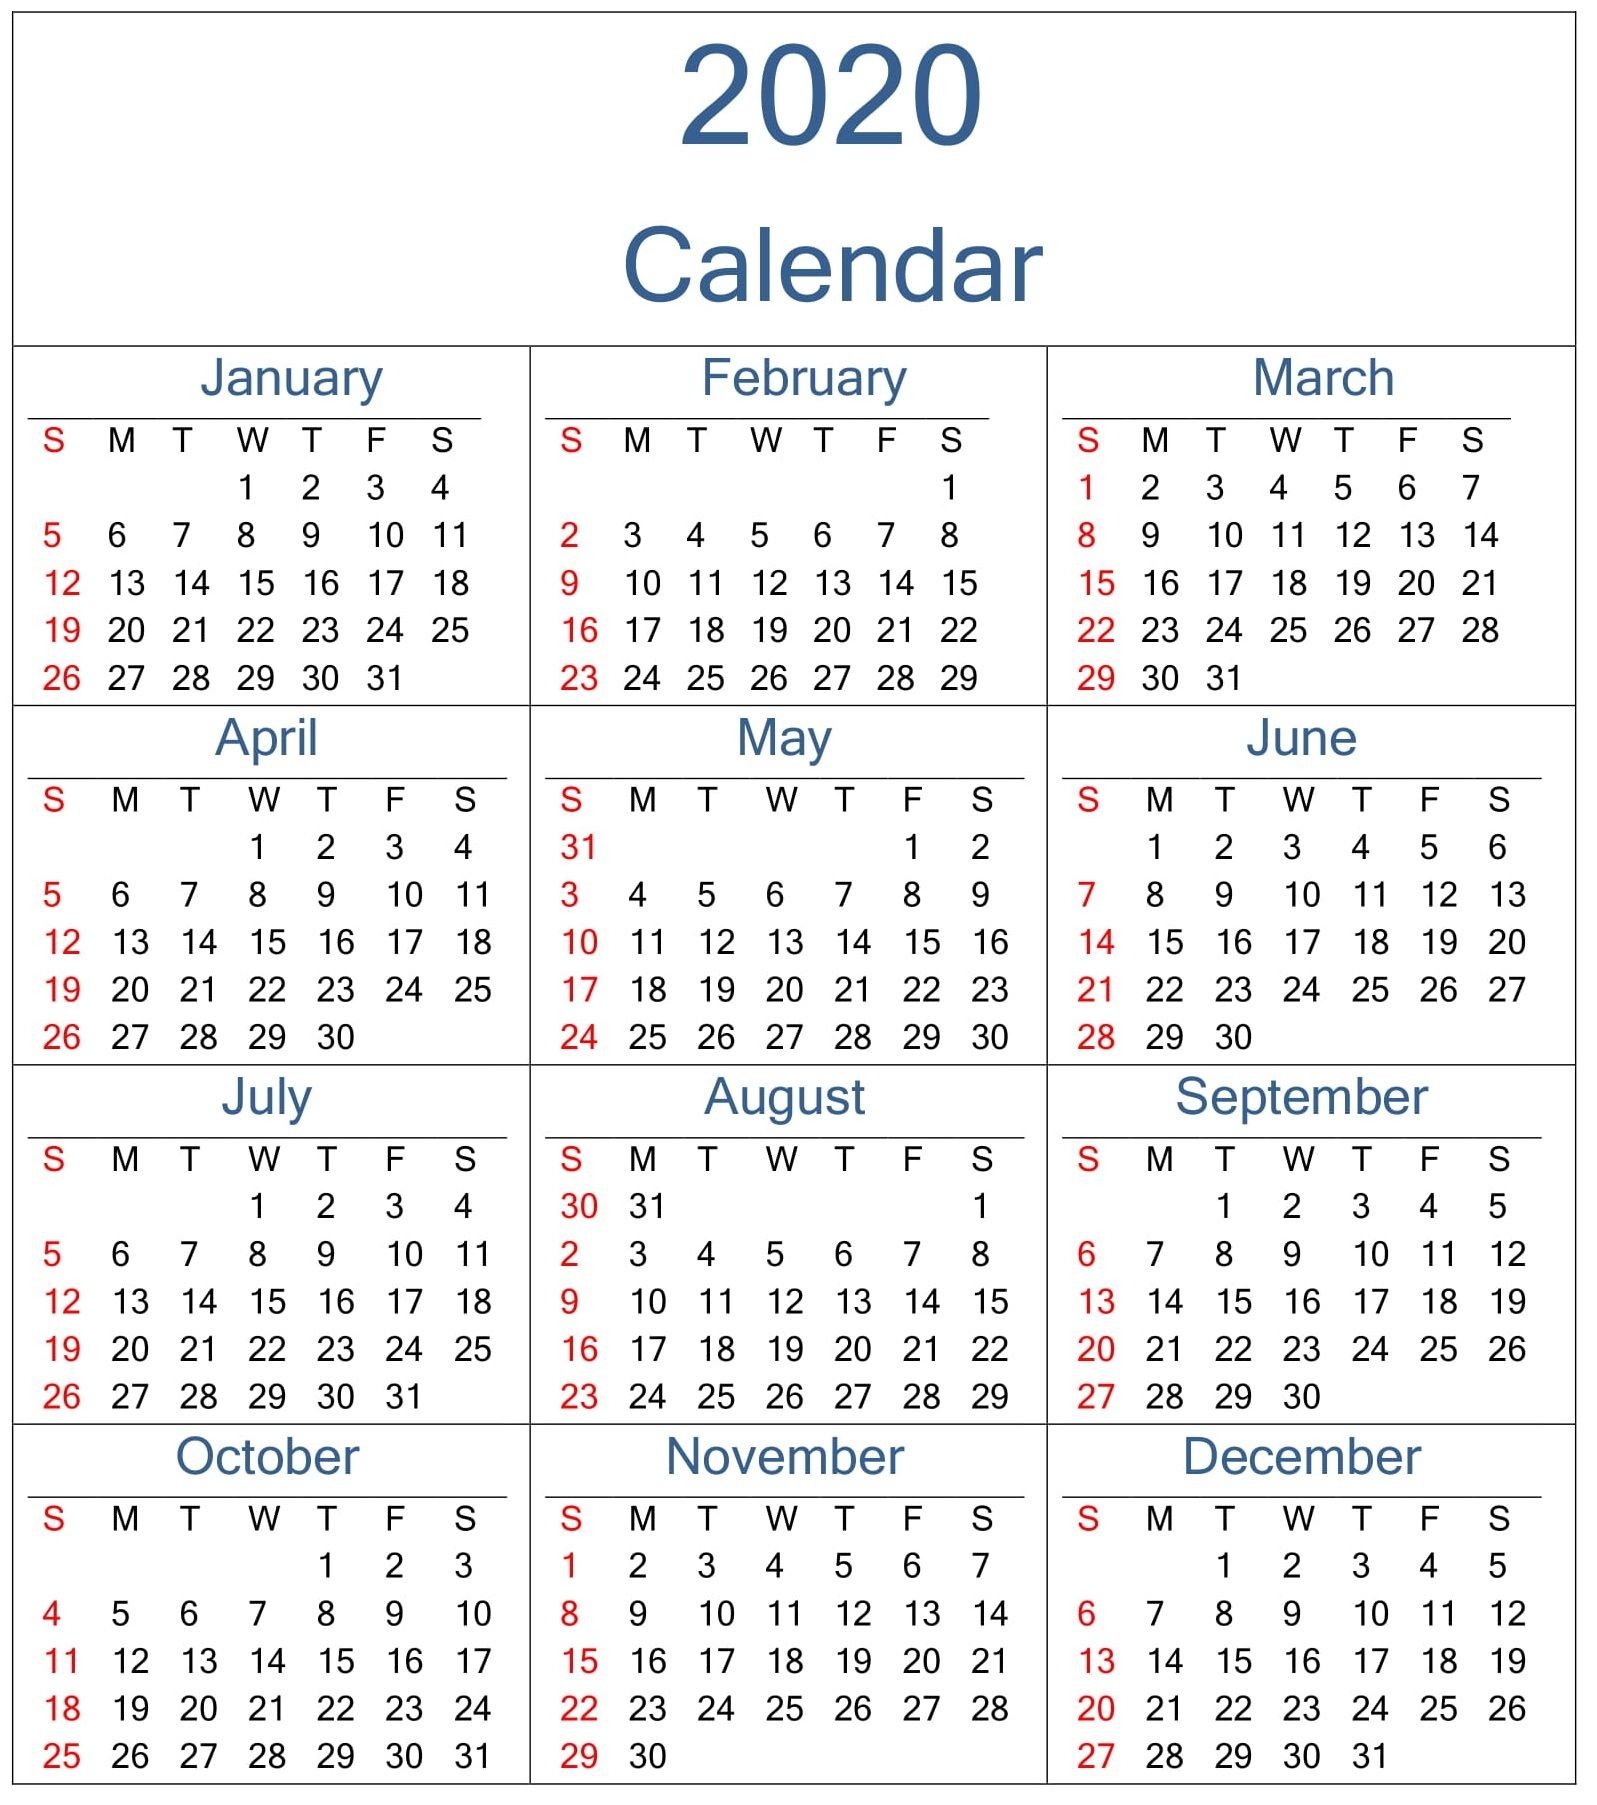 Get 2020 Monthly Calinder With Week Numbers | Calendar